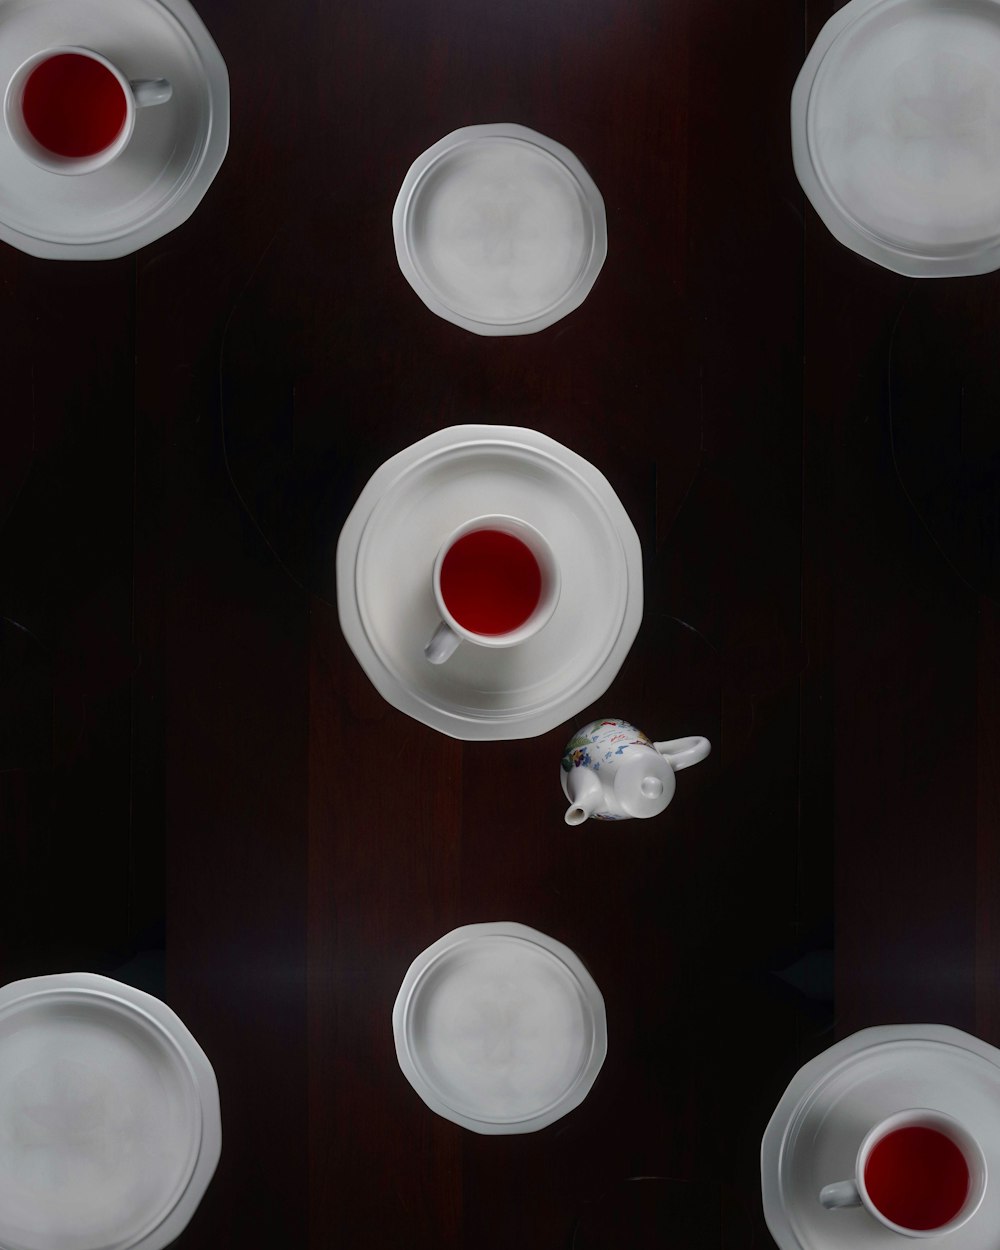 white ceramic teacup on table